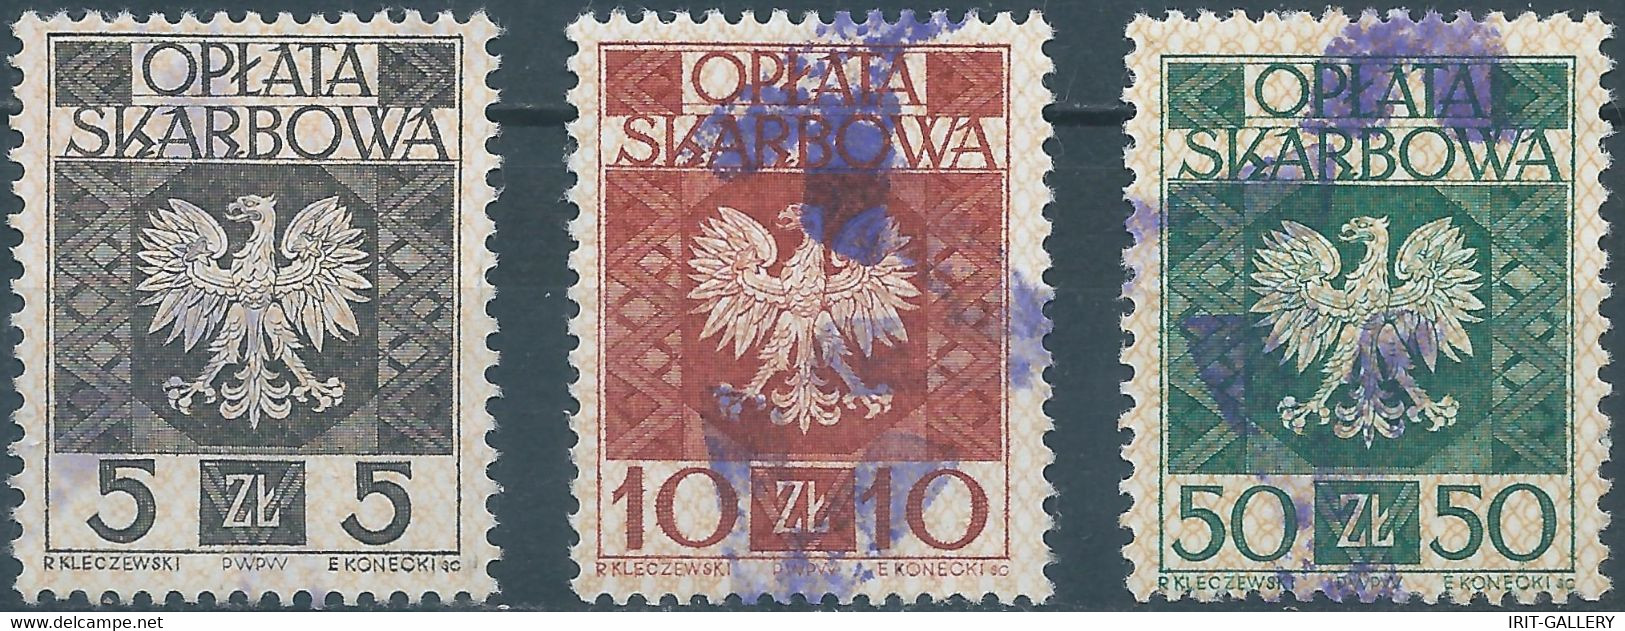 POLONIA-POLAND-POLSKA,1958 Revenue Stamp Fiscal TaX 5-10- 50ZL (OPLATA SKARBOWA) Used - Steuermarken